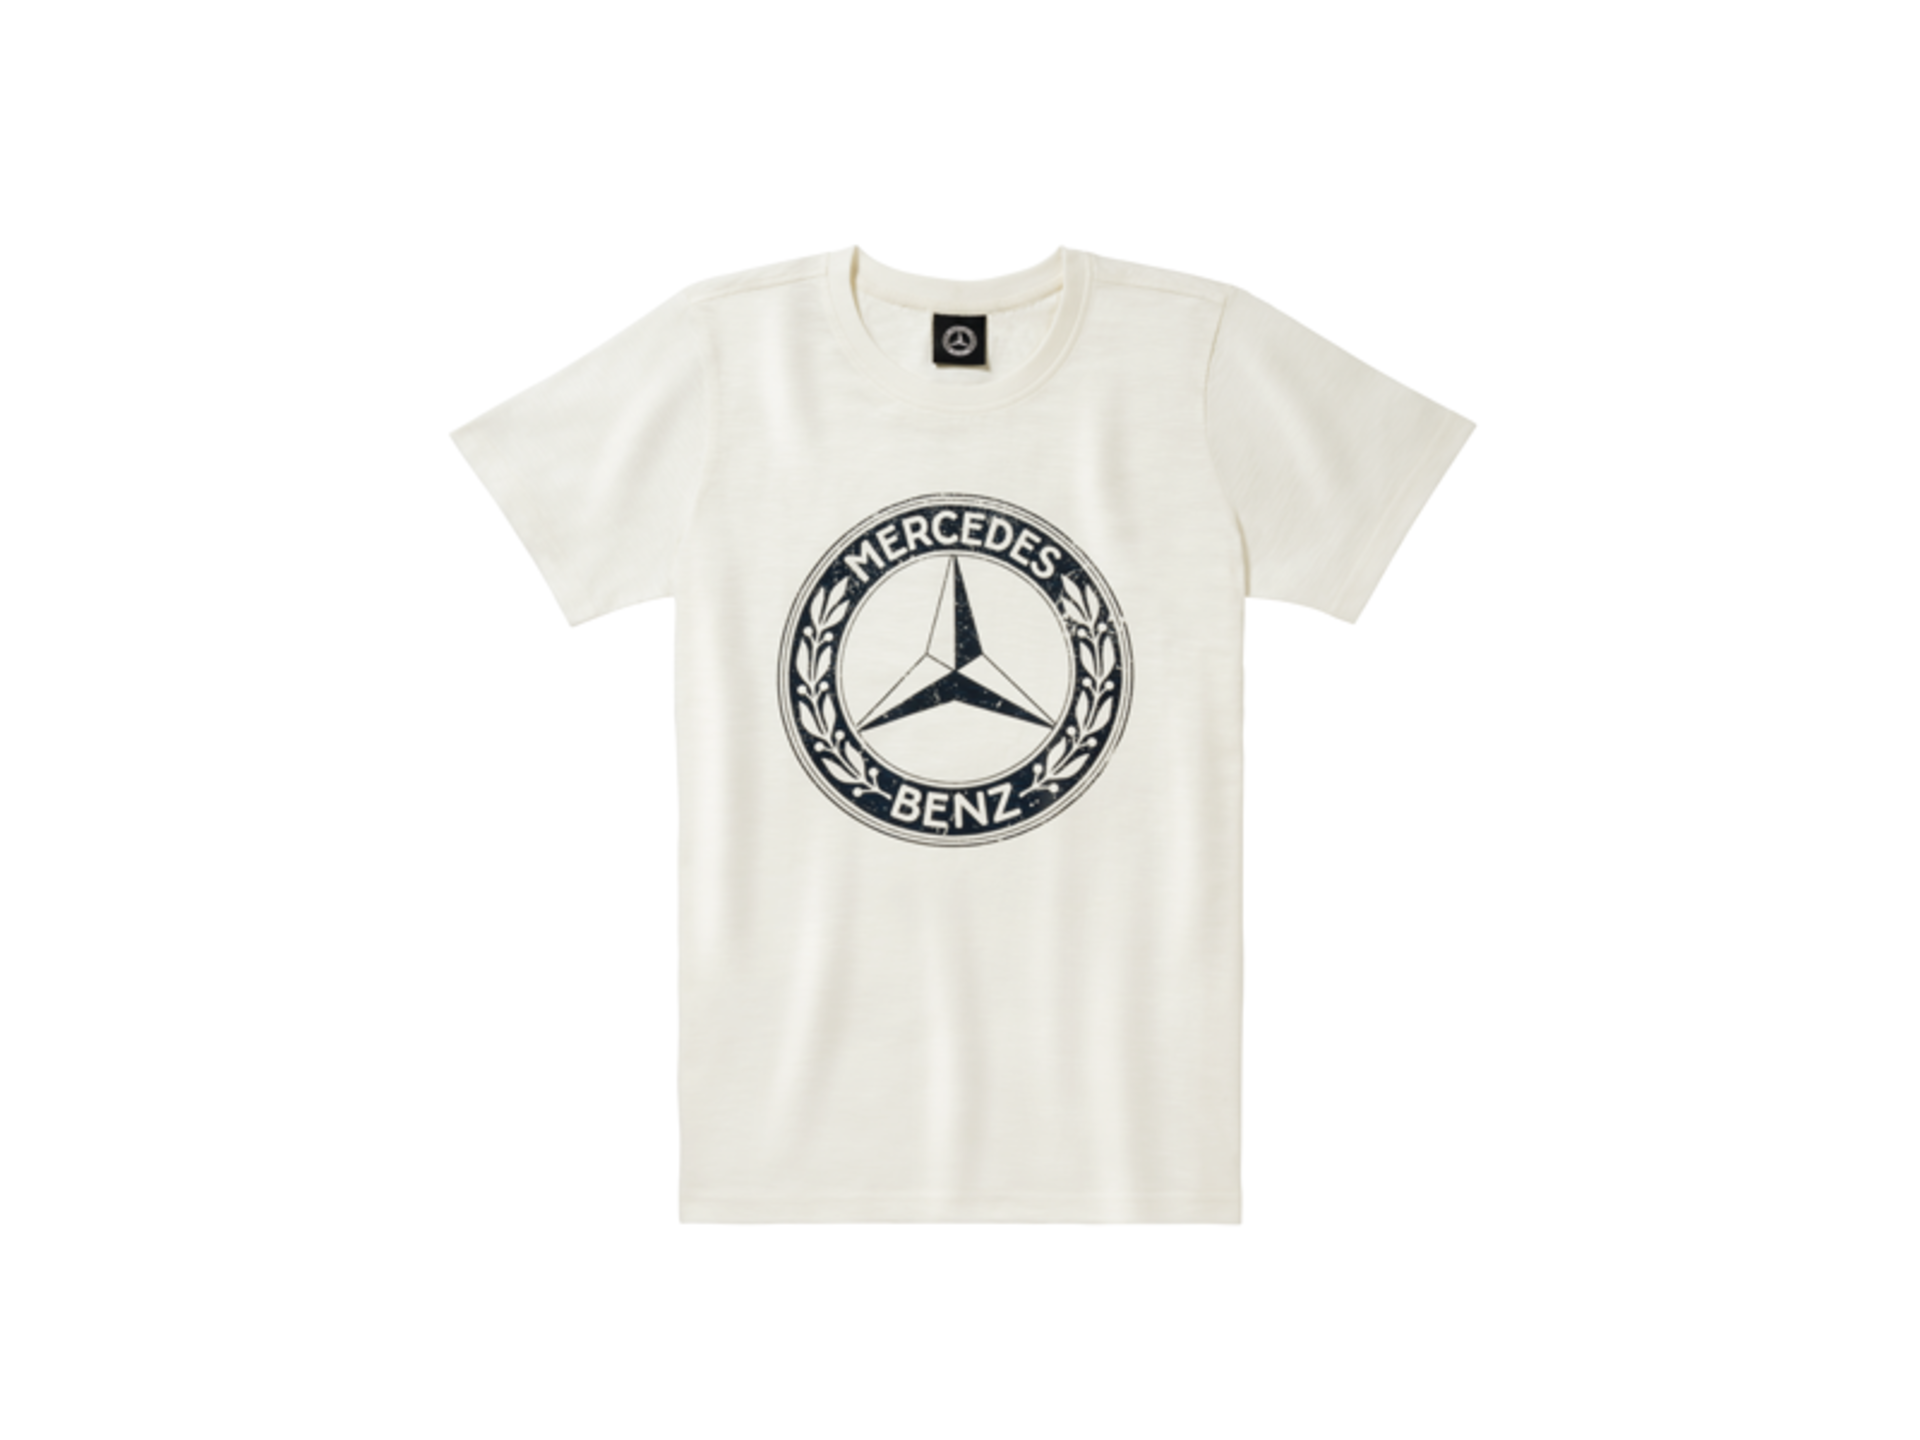   Mercedes Men's T-shirt, Off-white, Classic L